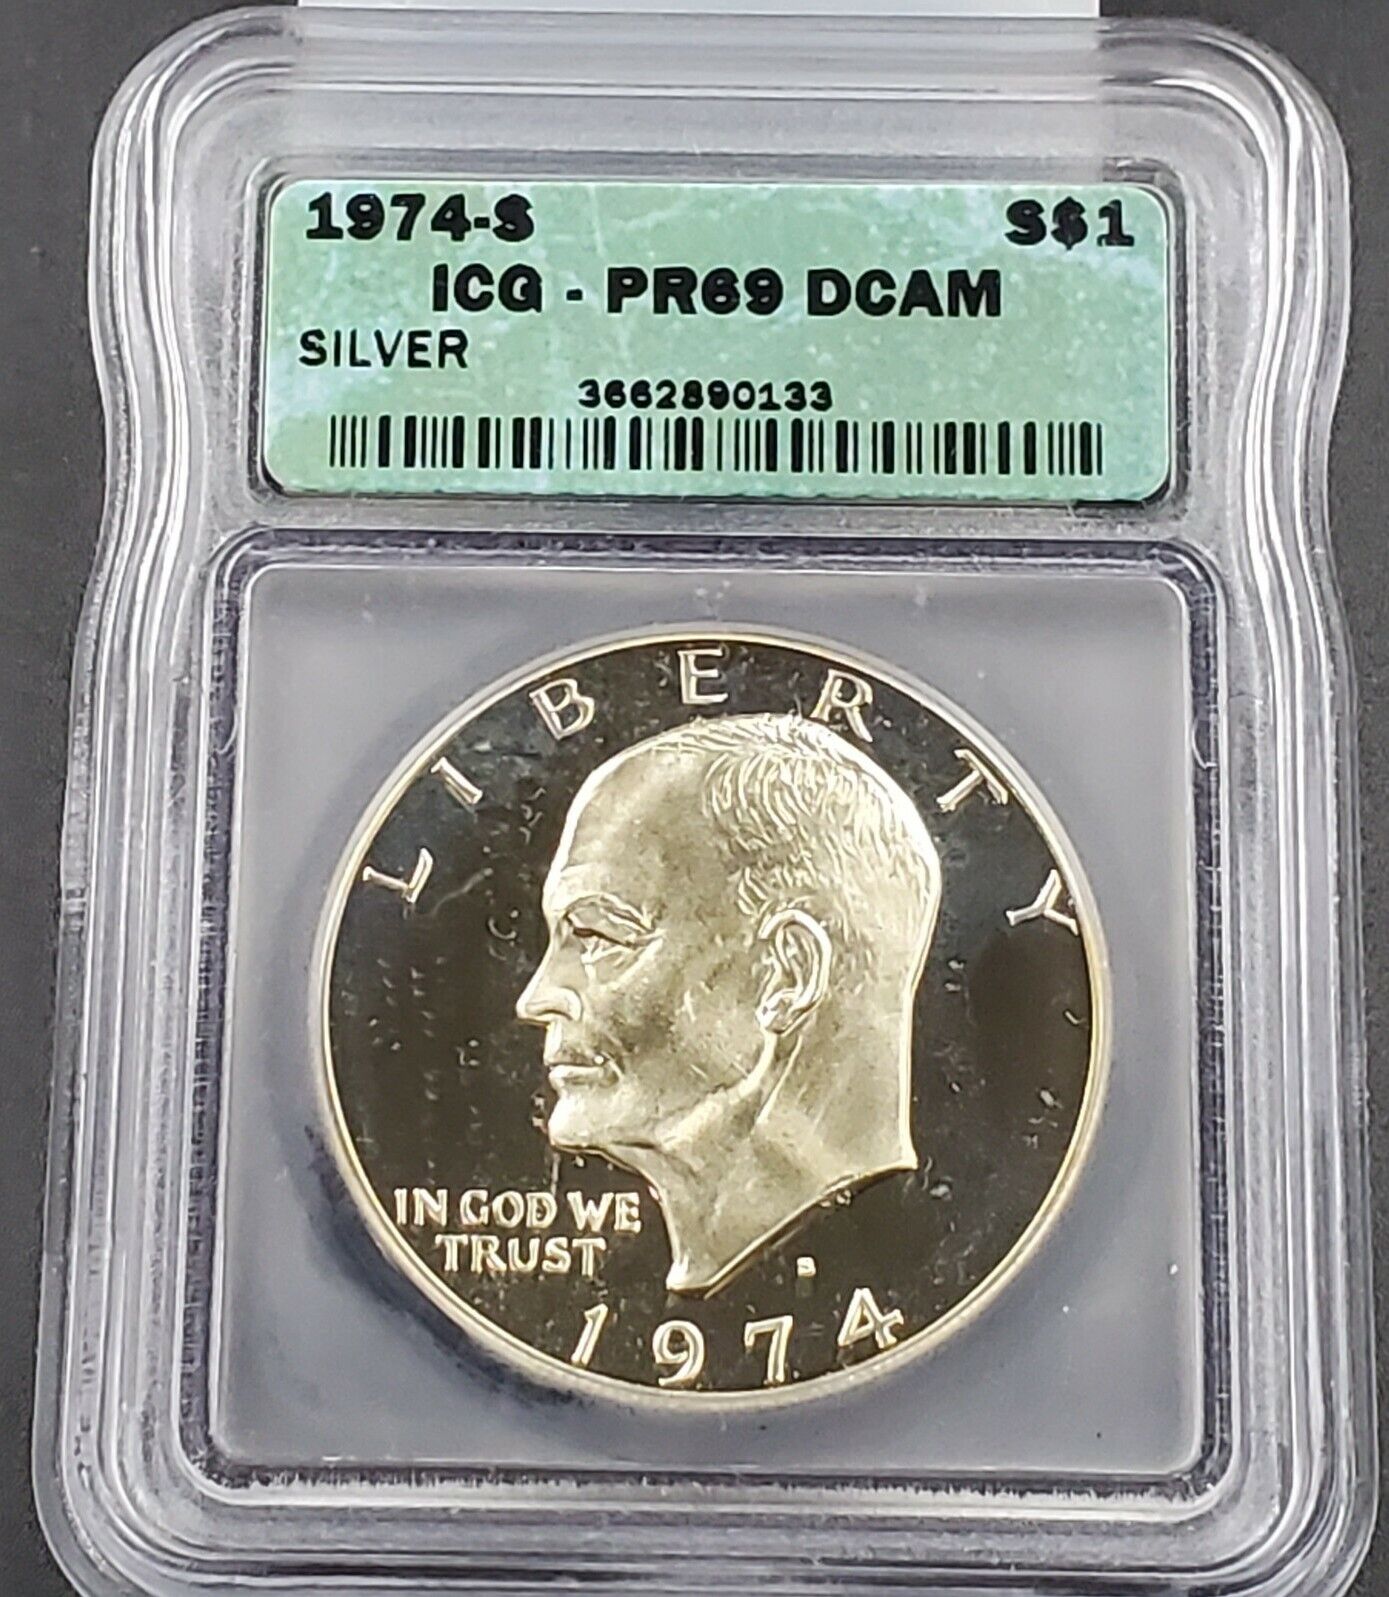 1974 S $1 Eisenhower Brown Ike 40% Silver PR69 DCAM ICG Not Much Toning Nice